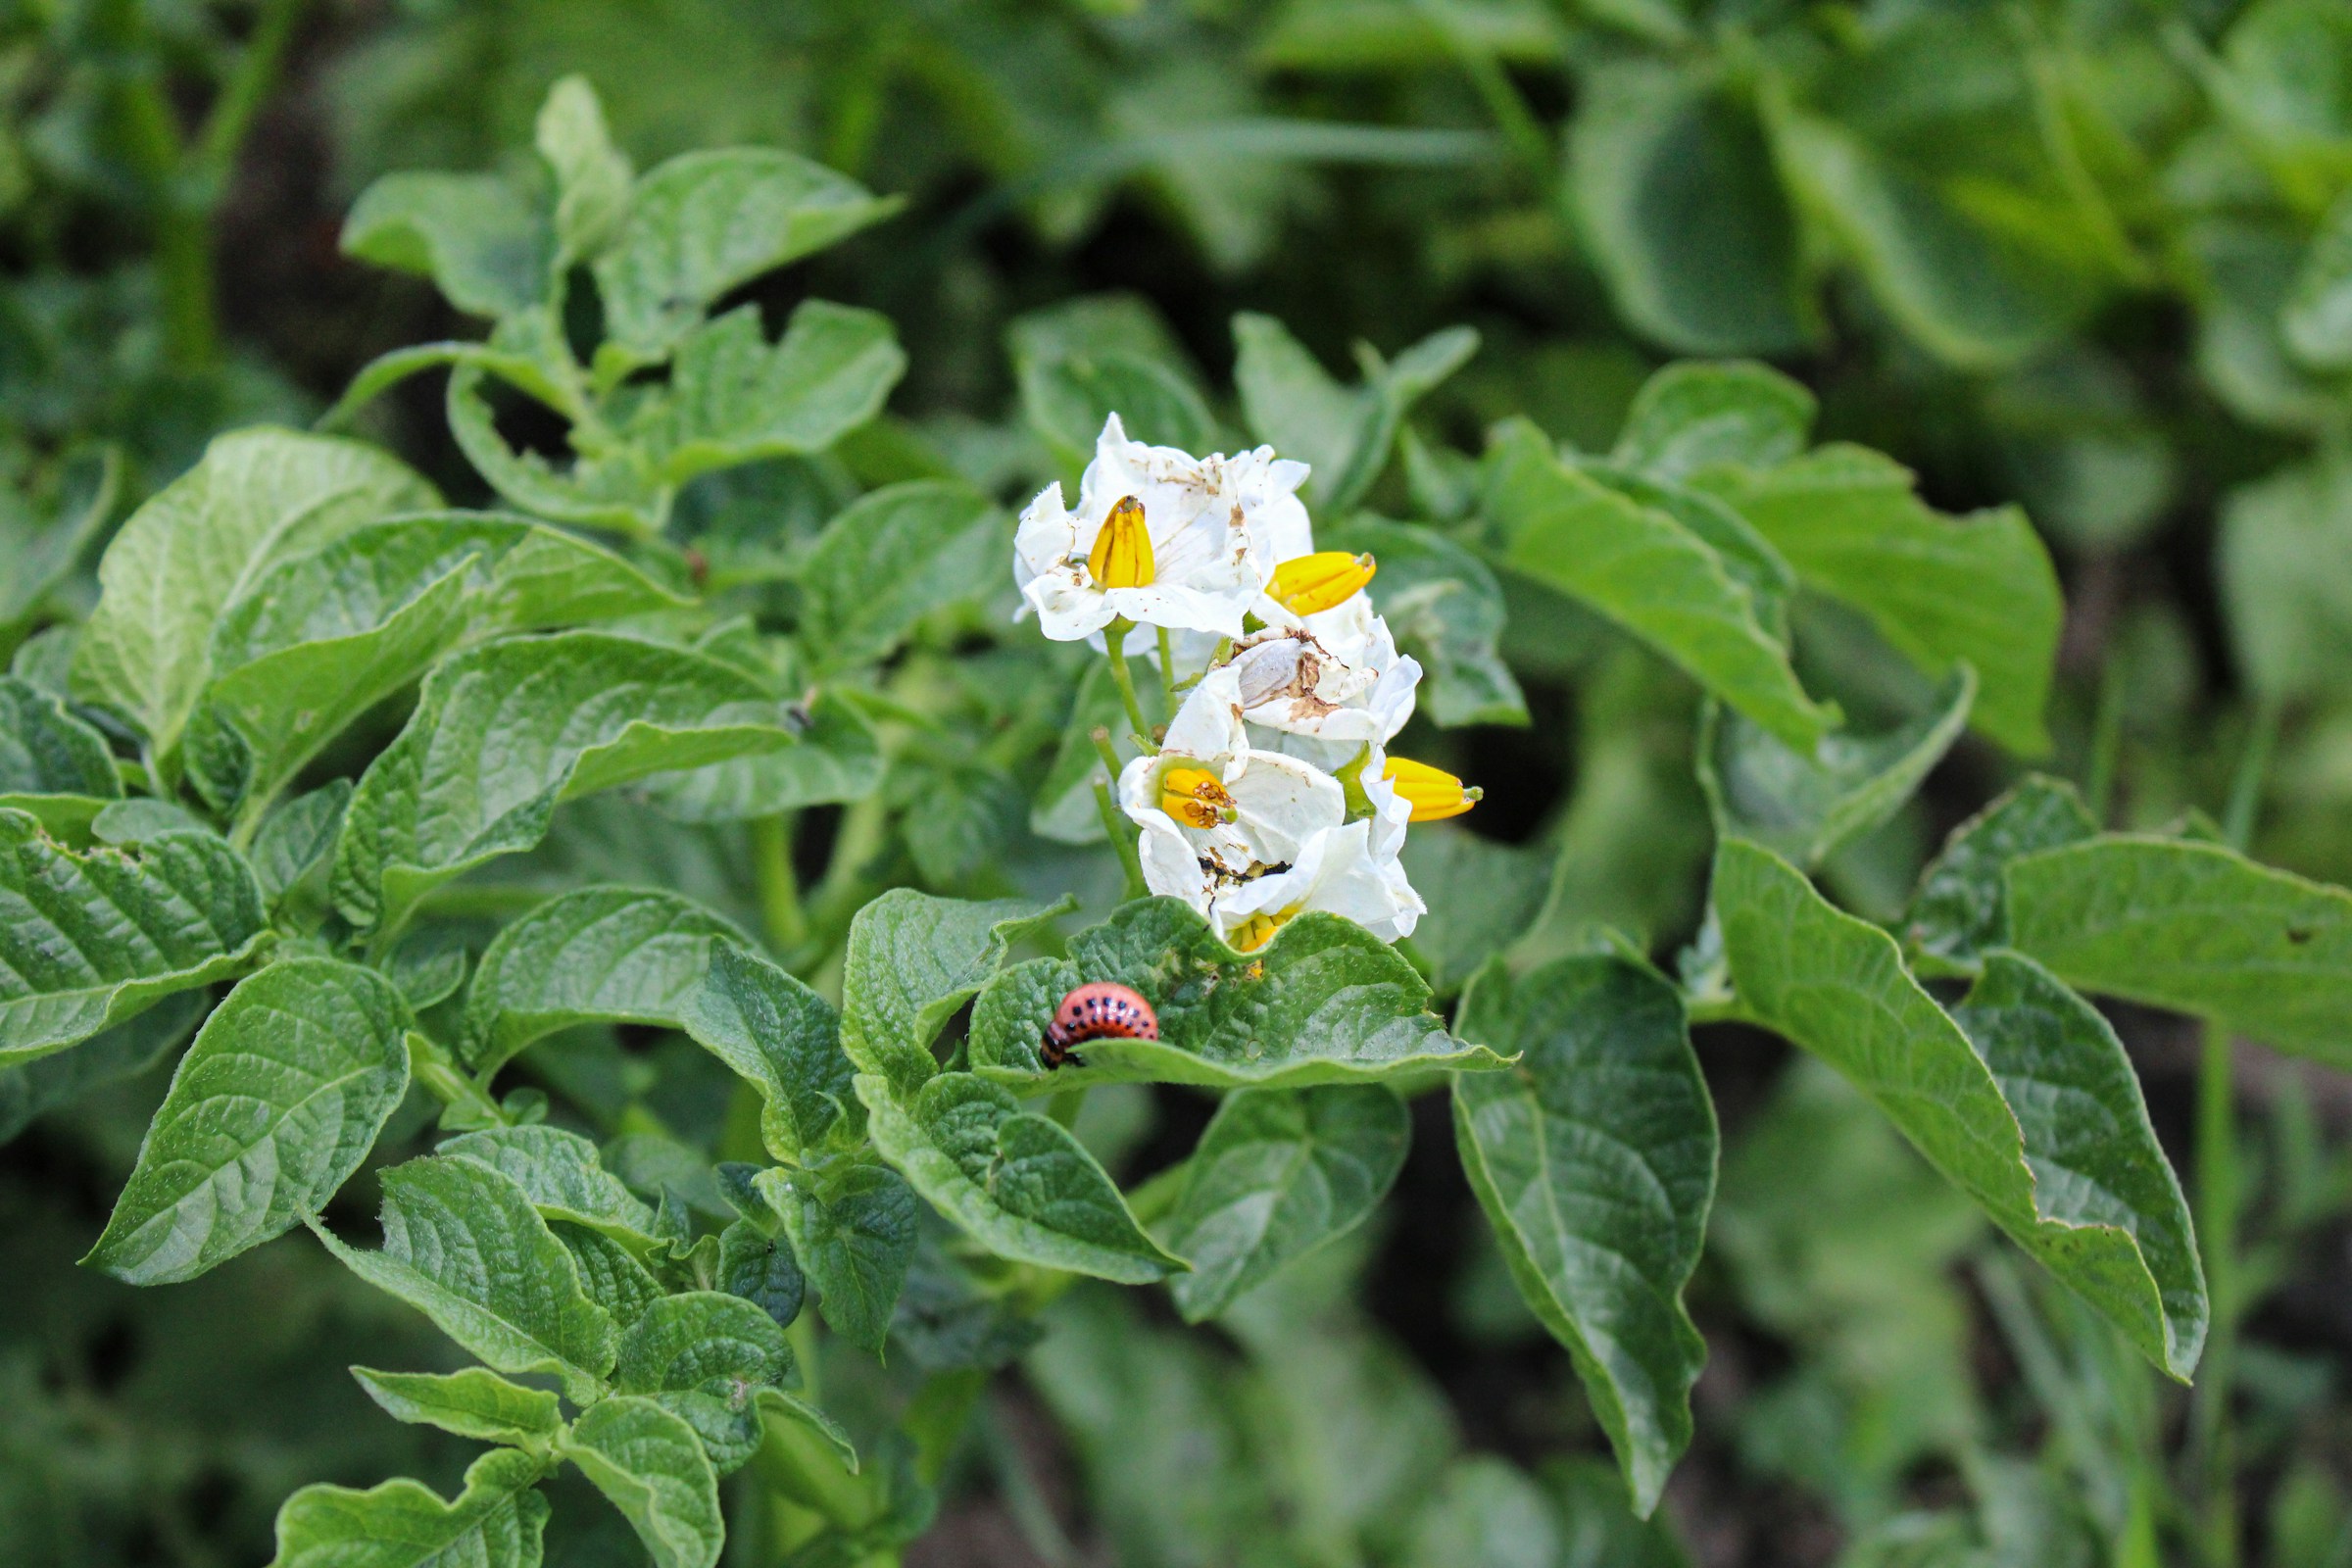 Flowering potato plant with potato beetle larvae 